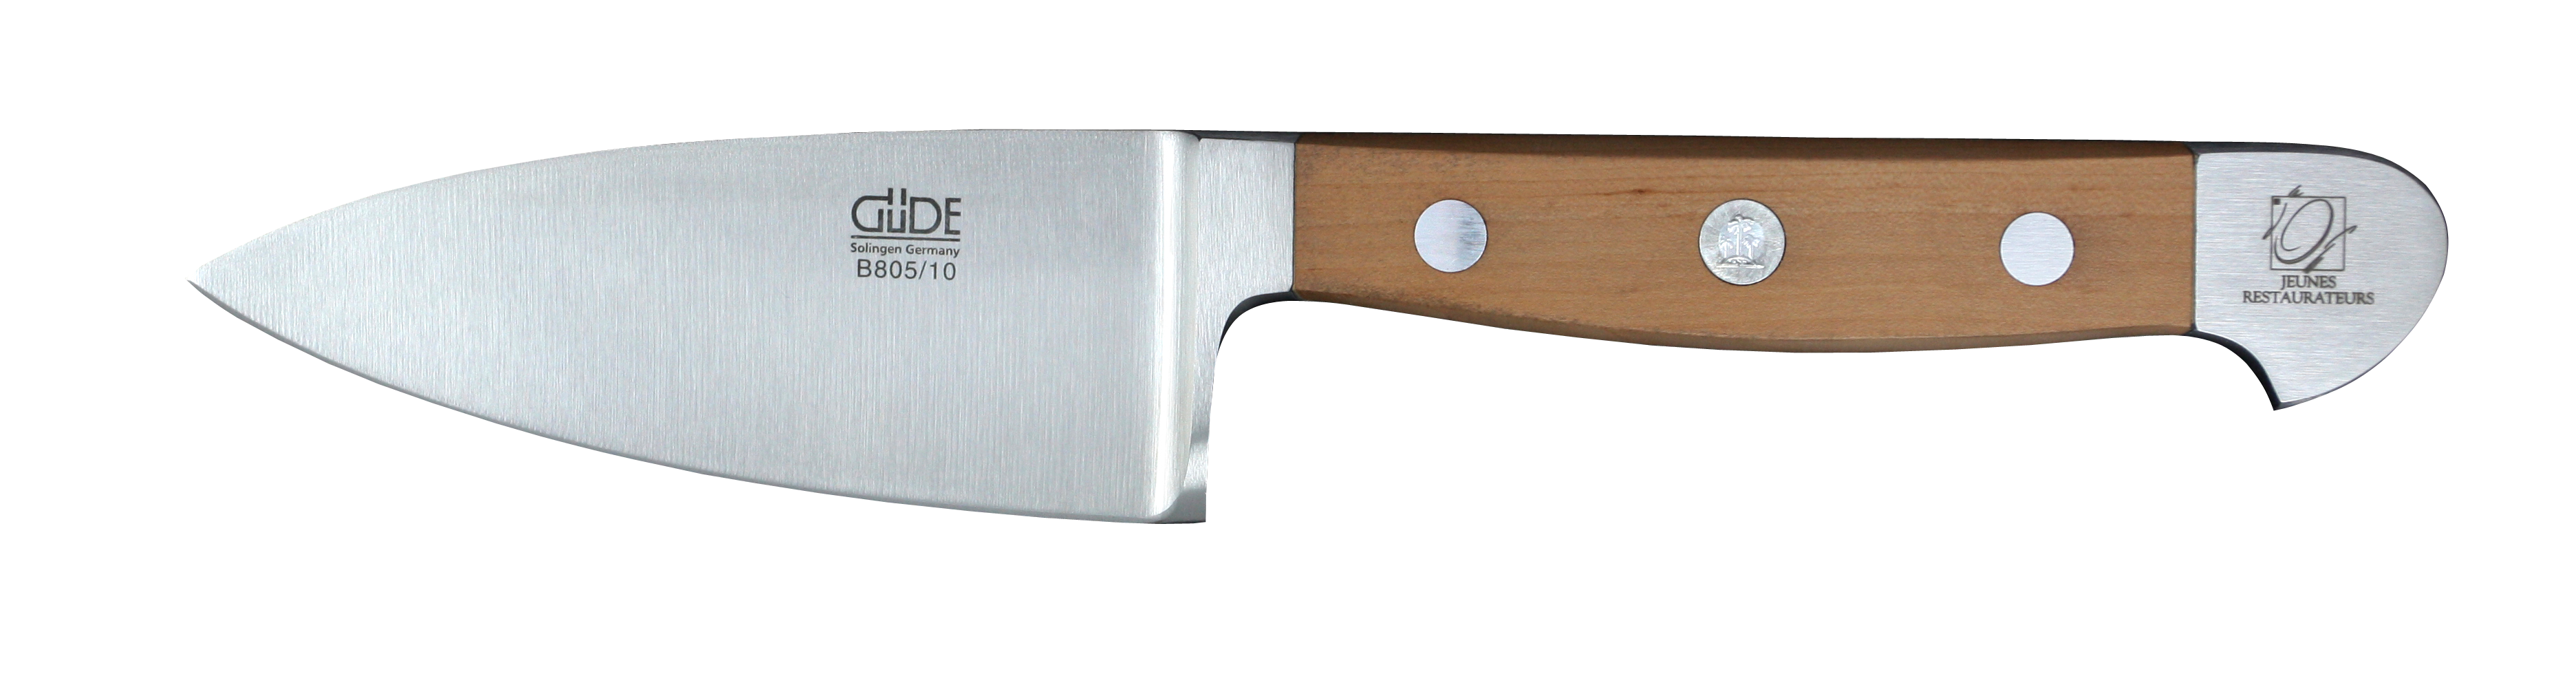 Güde Alpha Birne Hartkäsemesser 10 cm - CVM-Messerstahl mit Griffschalen aus Birnenholz